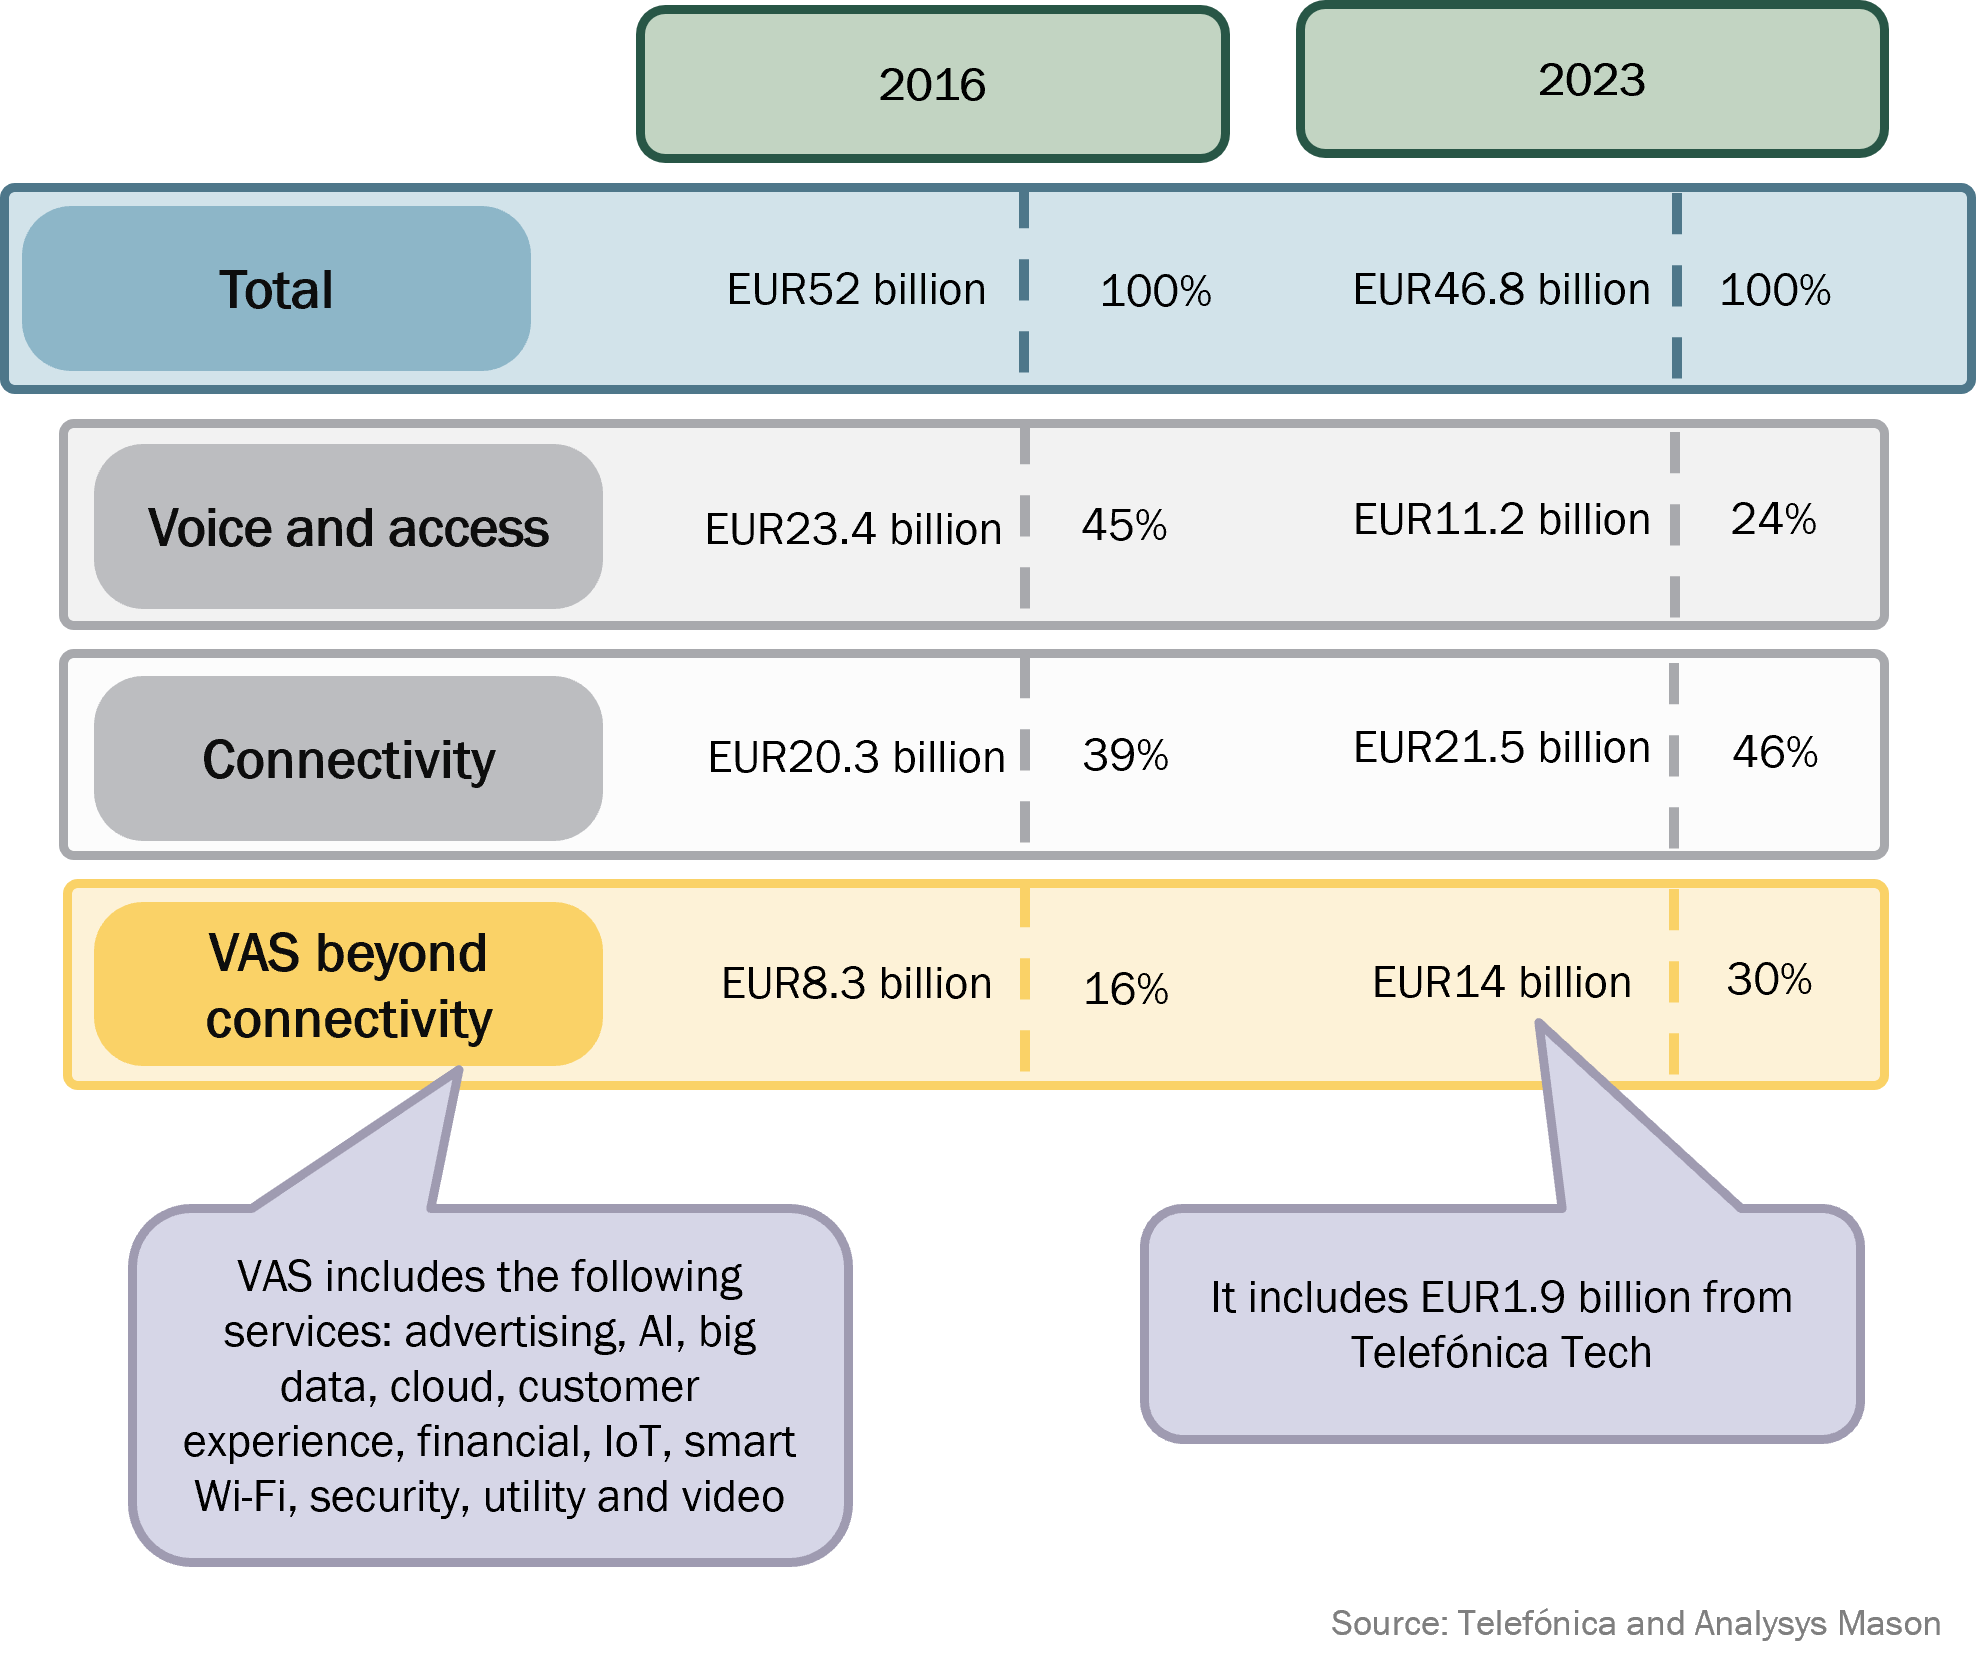 Figure 2: Breakdown of Telefónica group’s revenue by service (EUR billion), 2016 and 2023